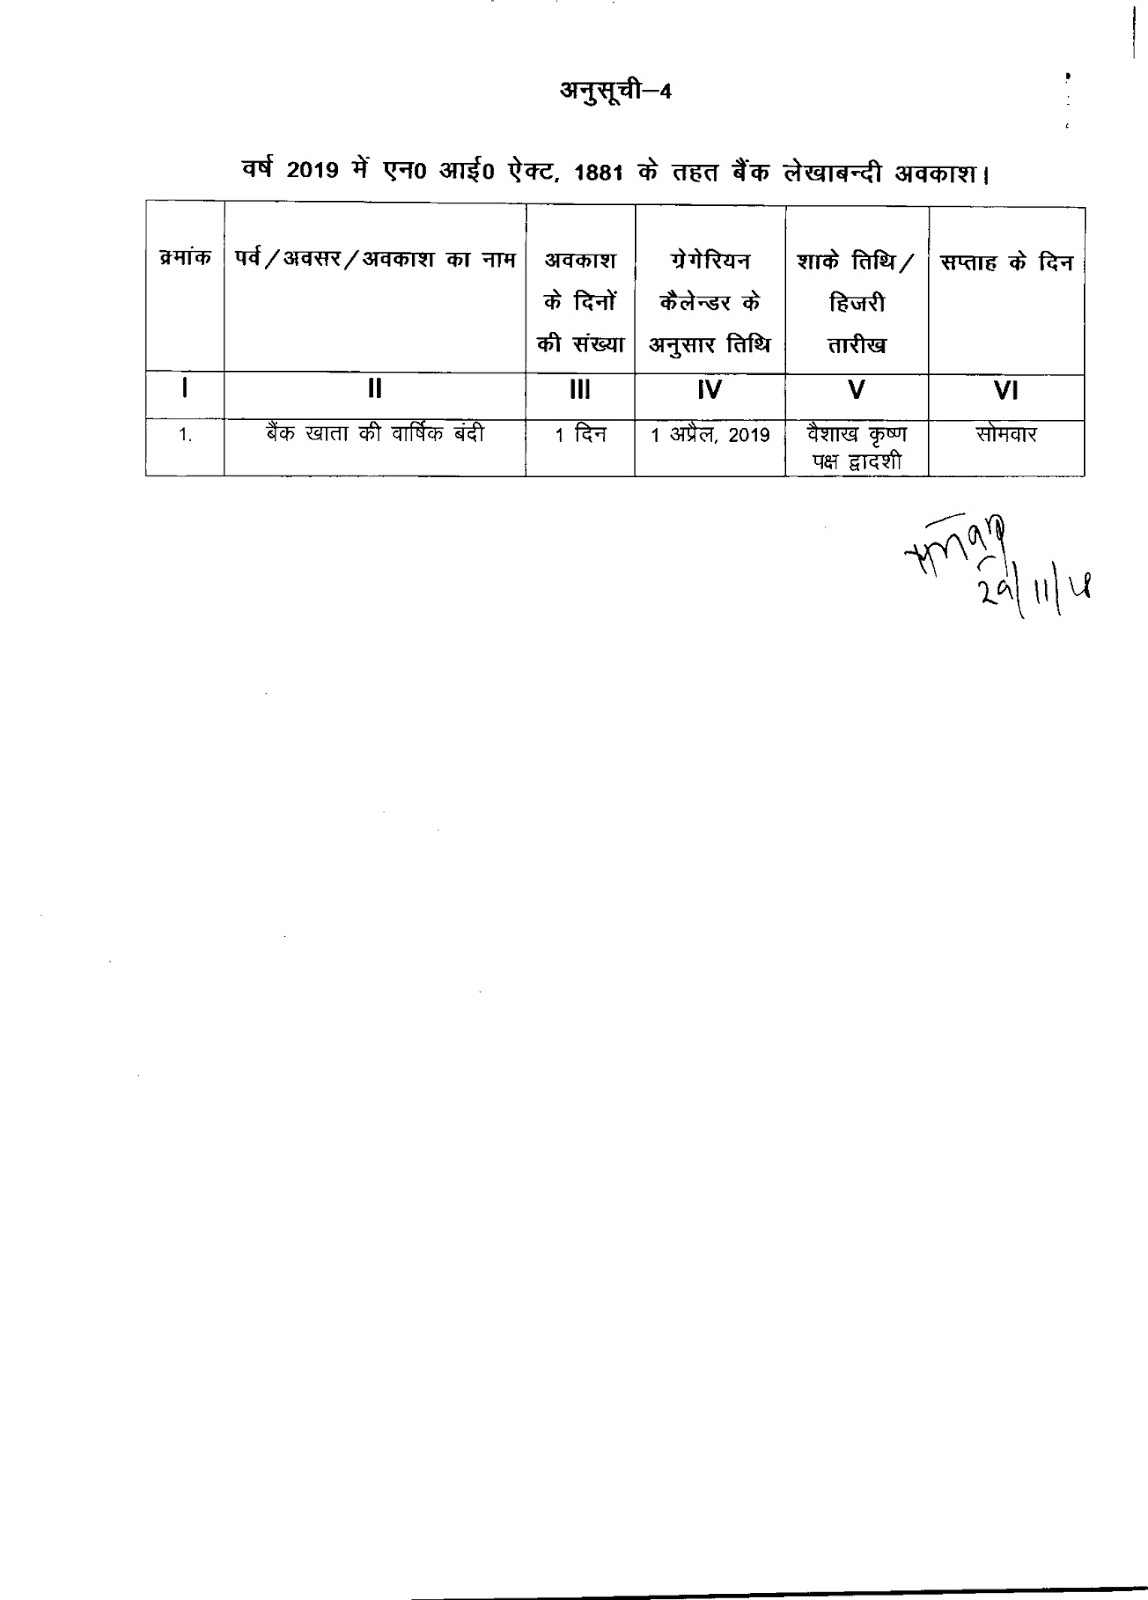 Bihar Government Calendar 2019 #educratsweb within Bihar Government Calendar